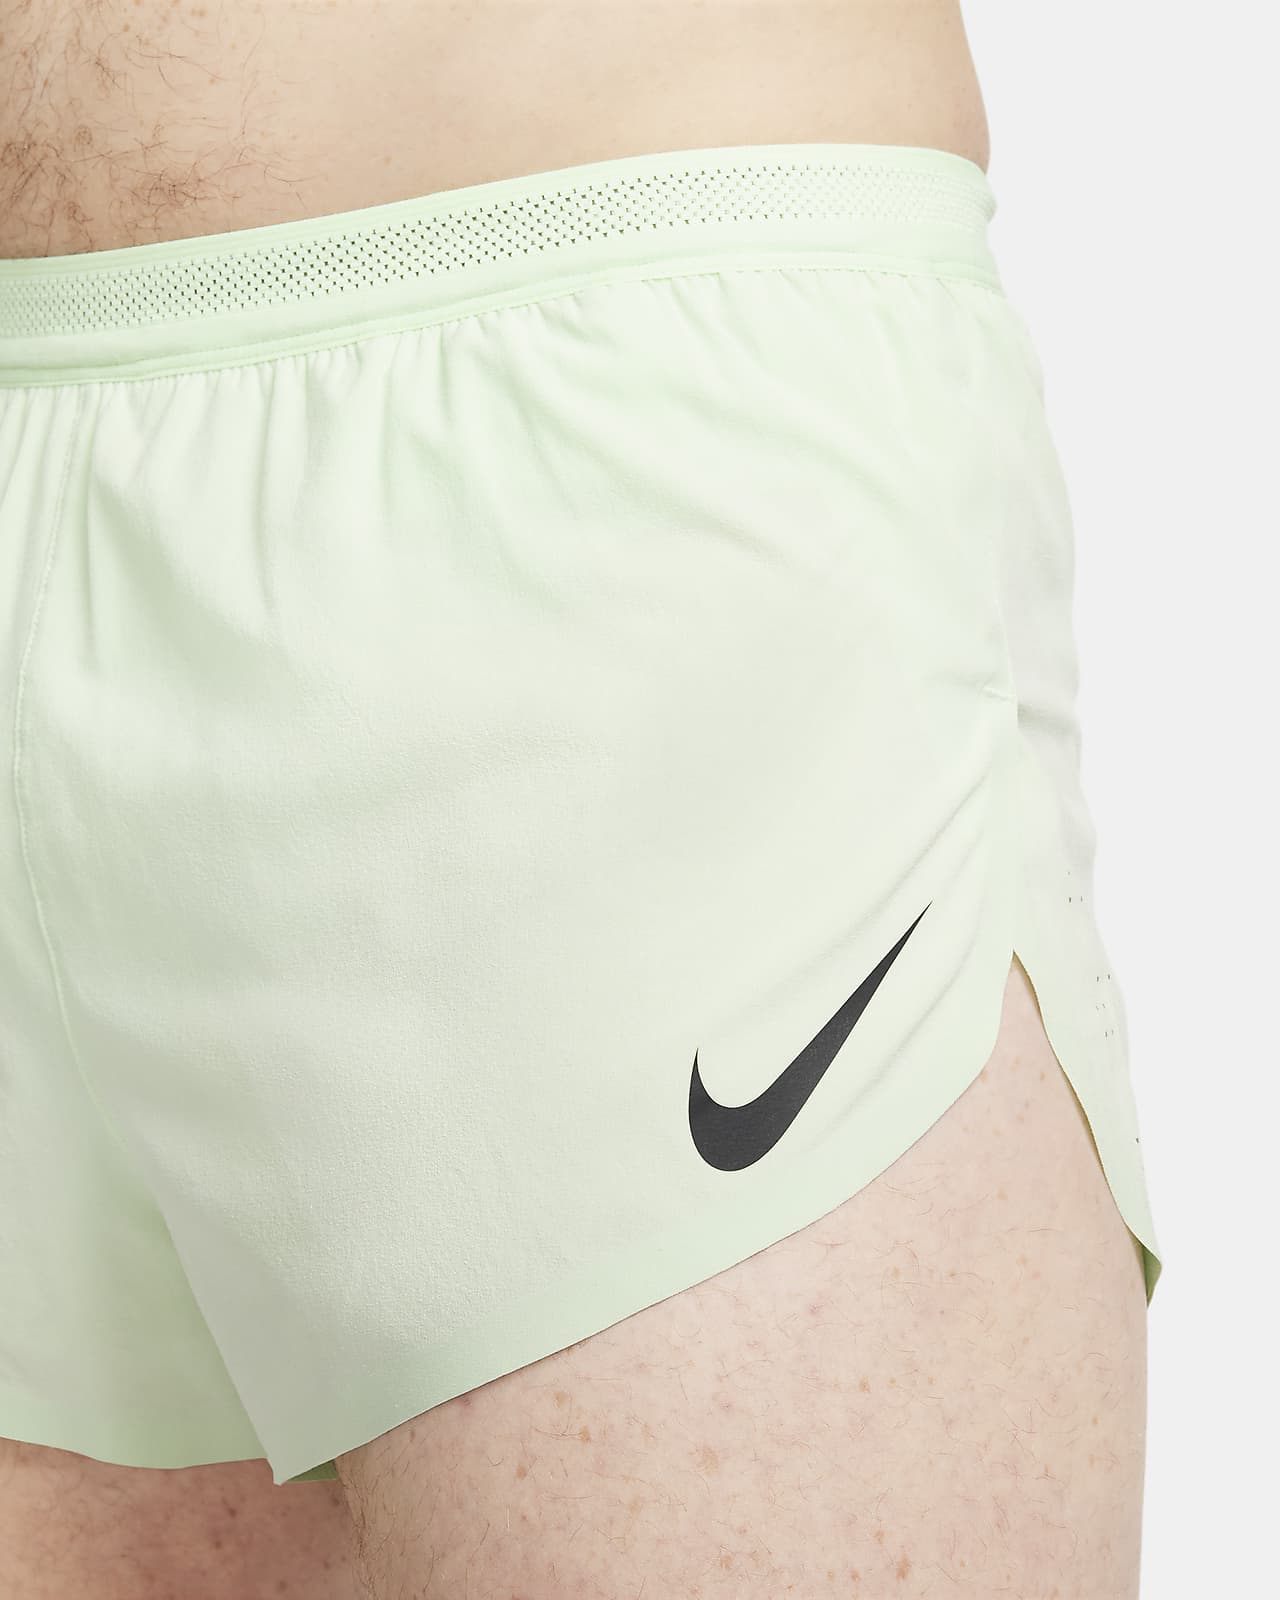 Shorts Nike AeroSwift - Masculino em Promoção